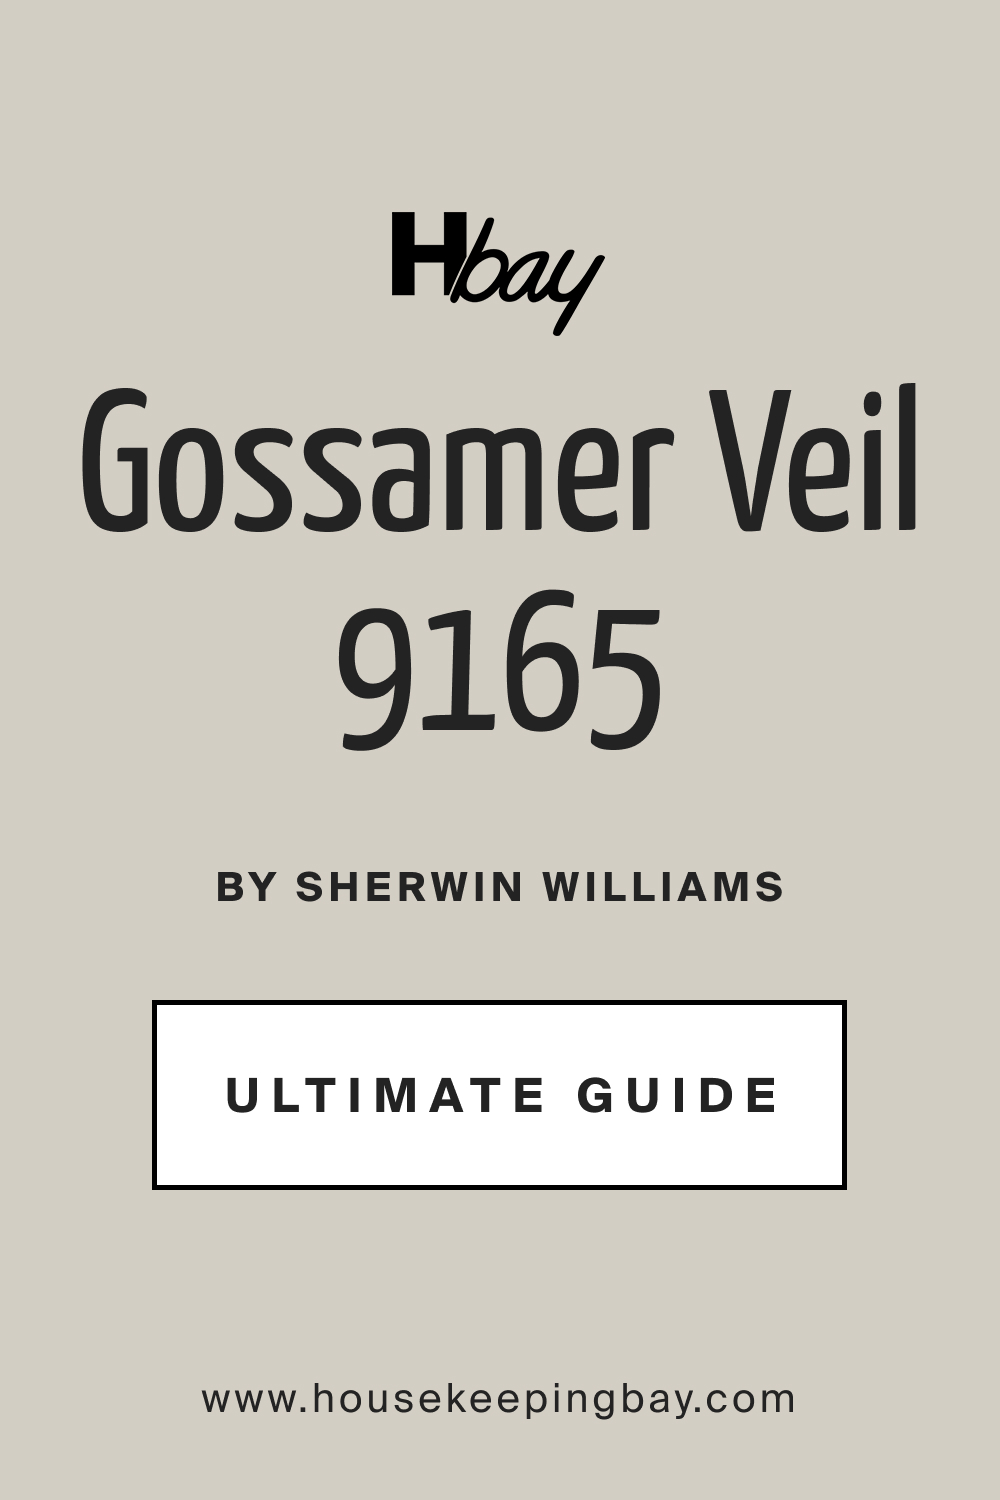 Gossamer Veil SW 9165 by Sherwin Williams Ultimate Guide